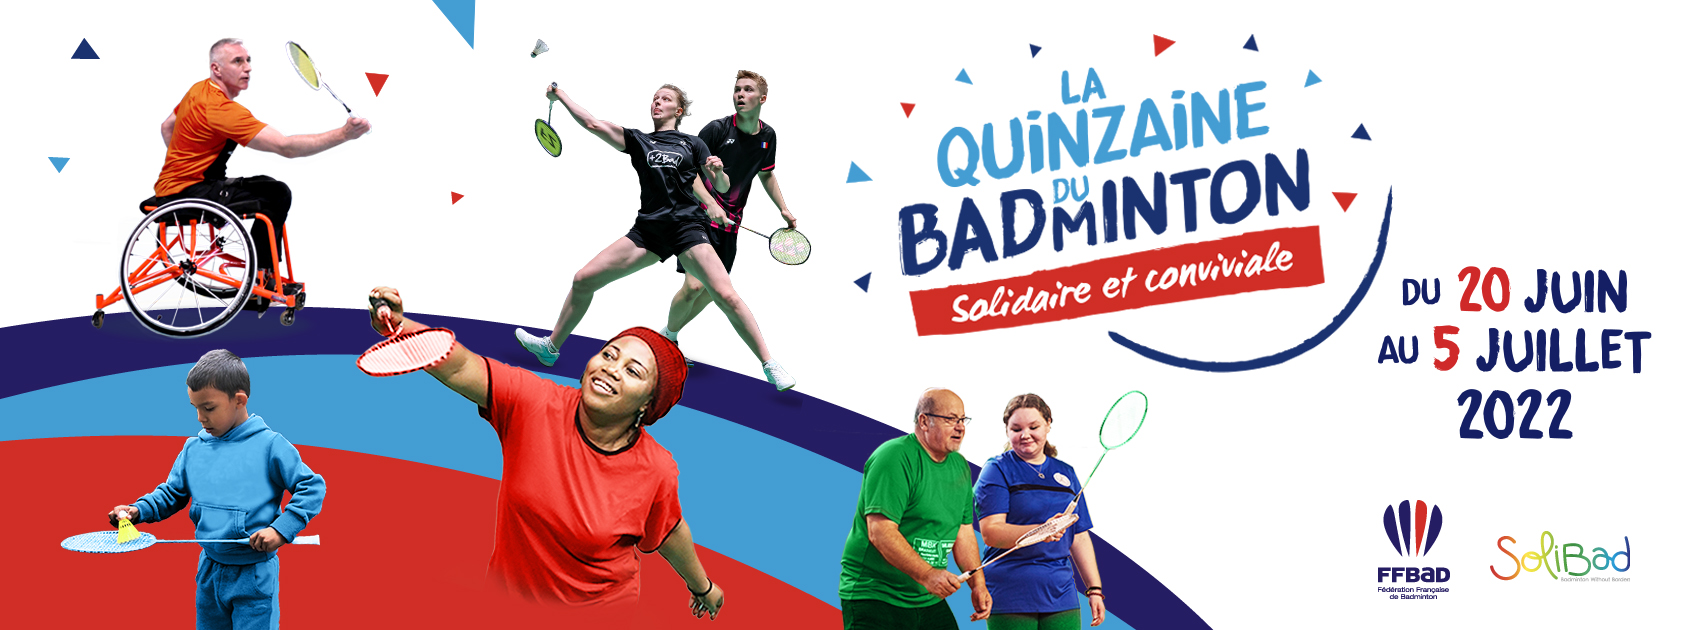 https://www.lifb.org/wp-content/uploads/2022/06/FFBaD_Quinzaine-du-Badminton_Bandeau-FB.jpg